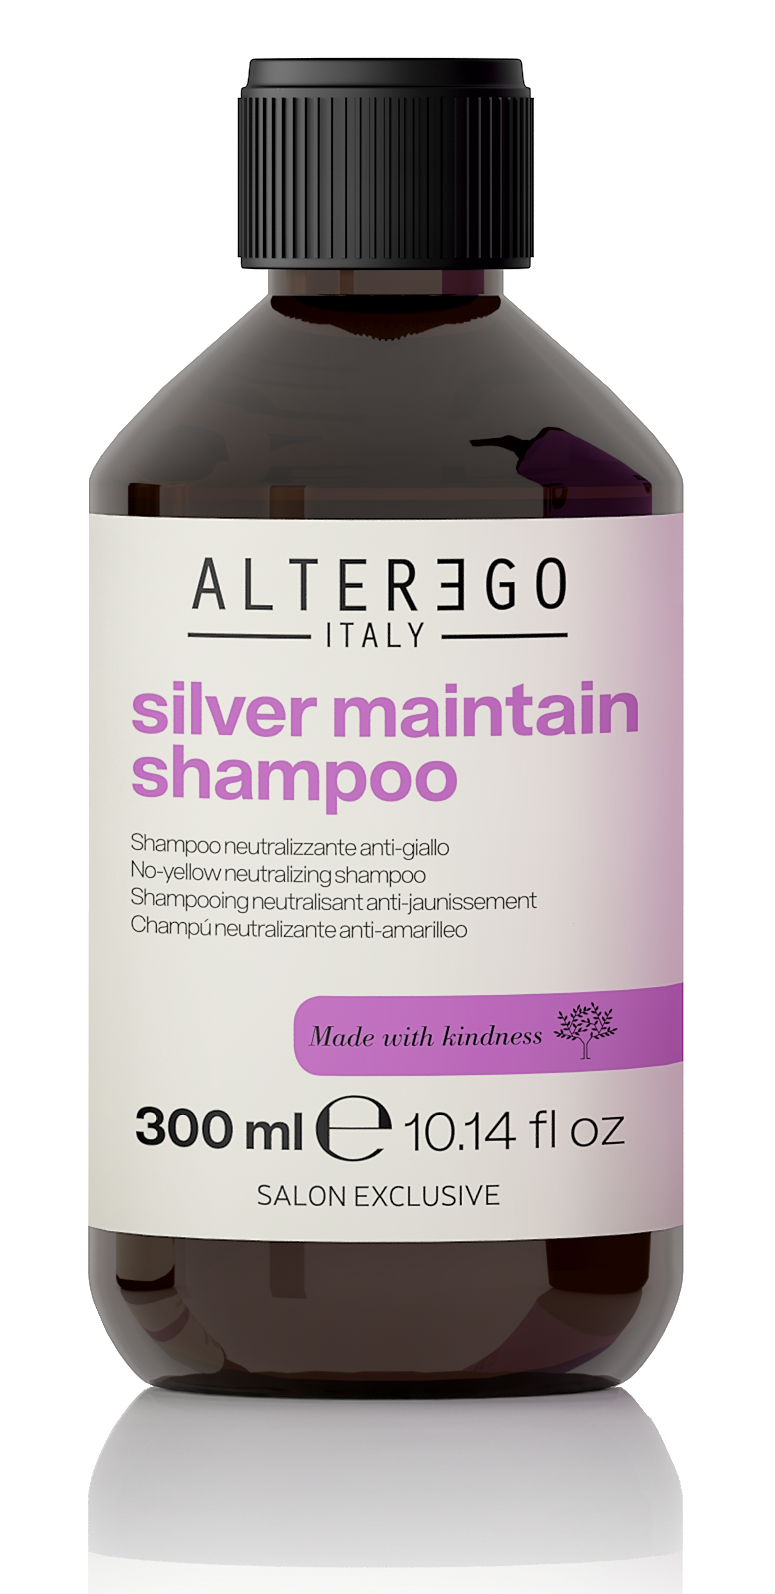 Alter Ego Silver Maintain Shampoo